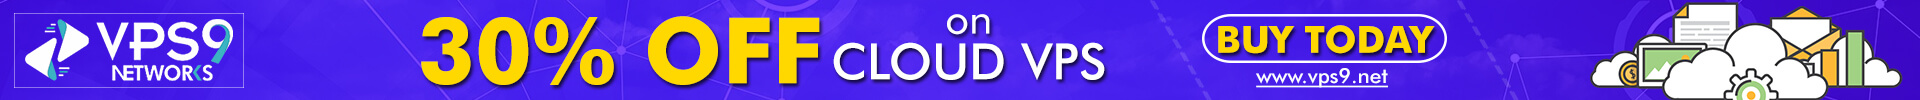 cloud-vps-offers-banner-2019.jpg